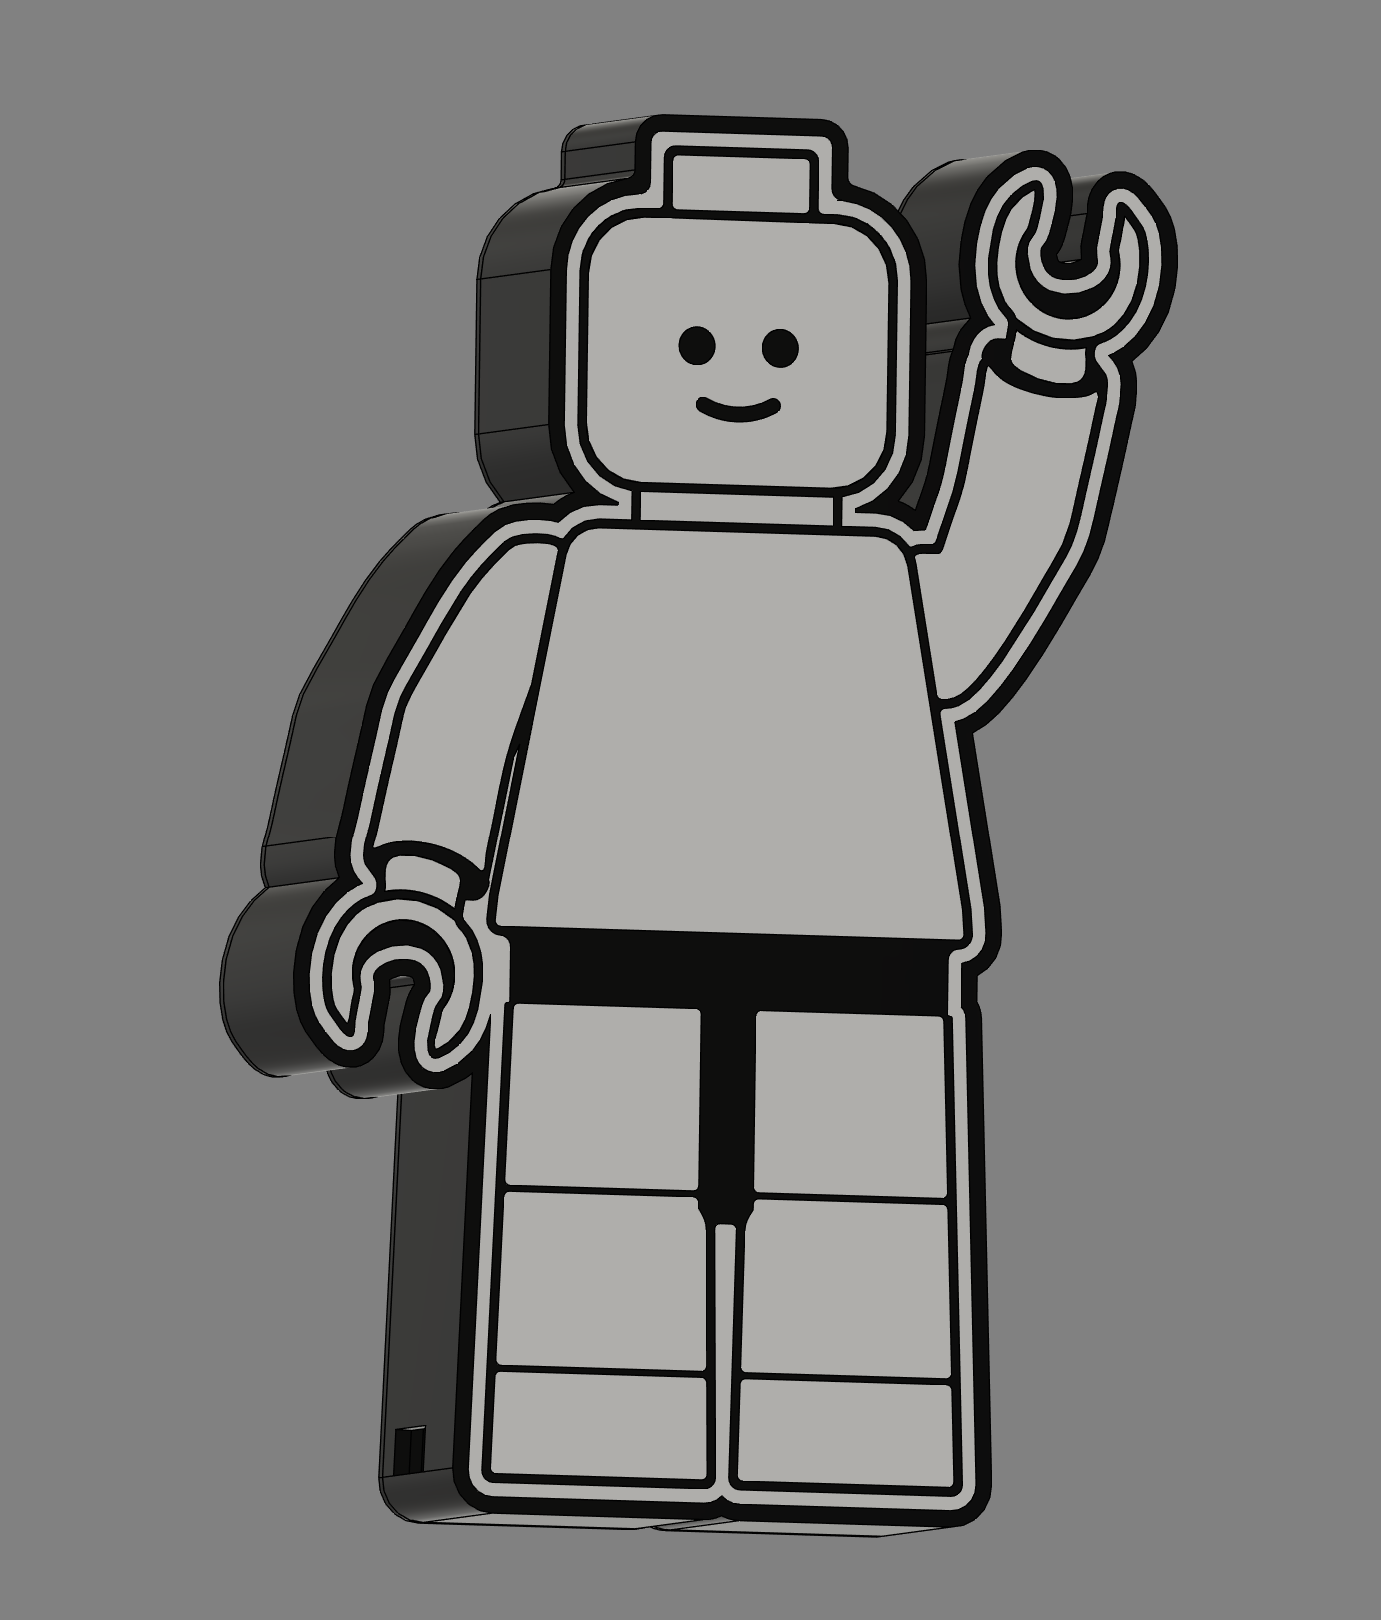 Lego-man Light Box